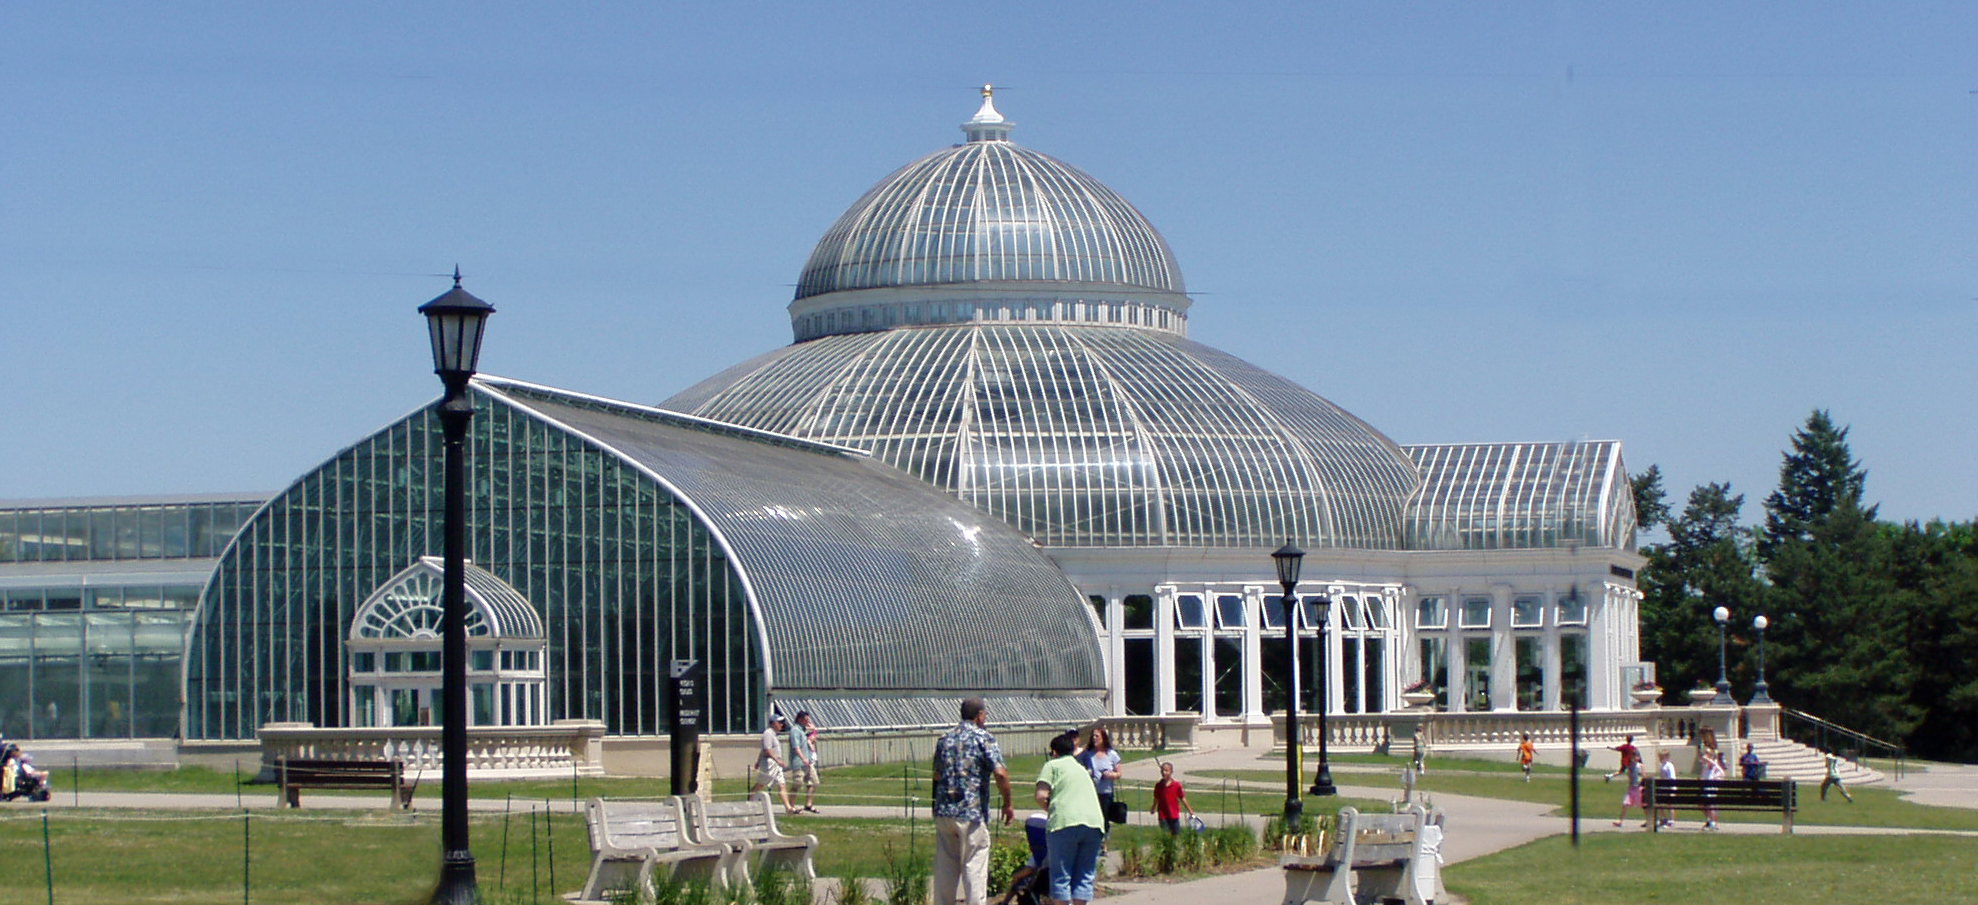 Image result for como park conservatory